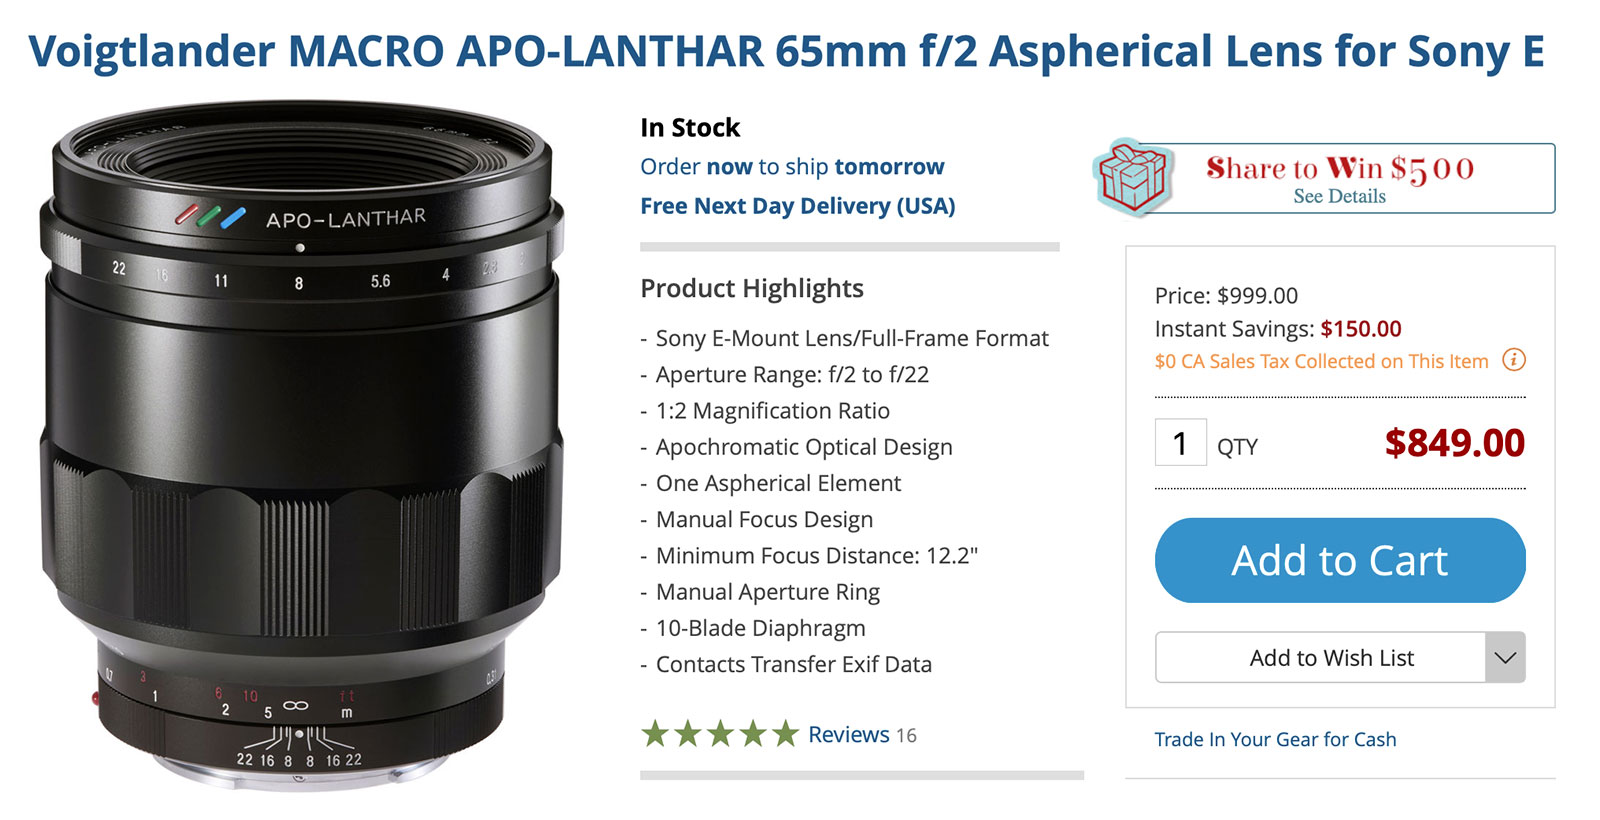 Voigtlander-Macro-APO-Lanthar-65mm-F2-Asperical-Lens-Deal